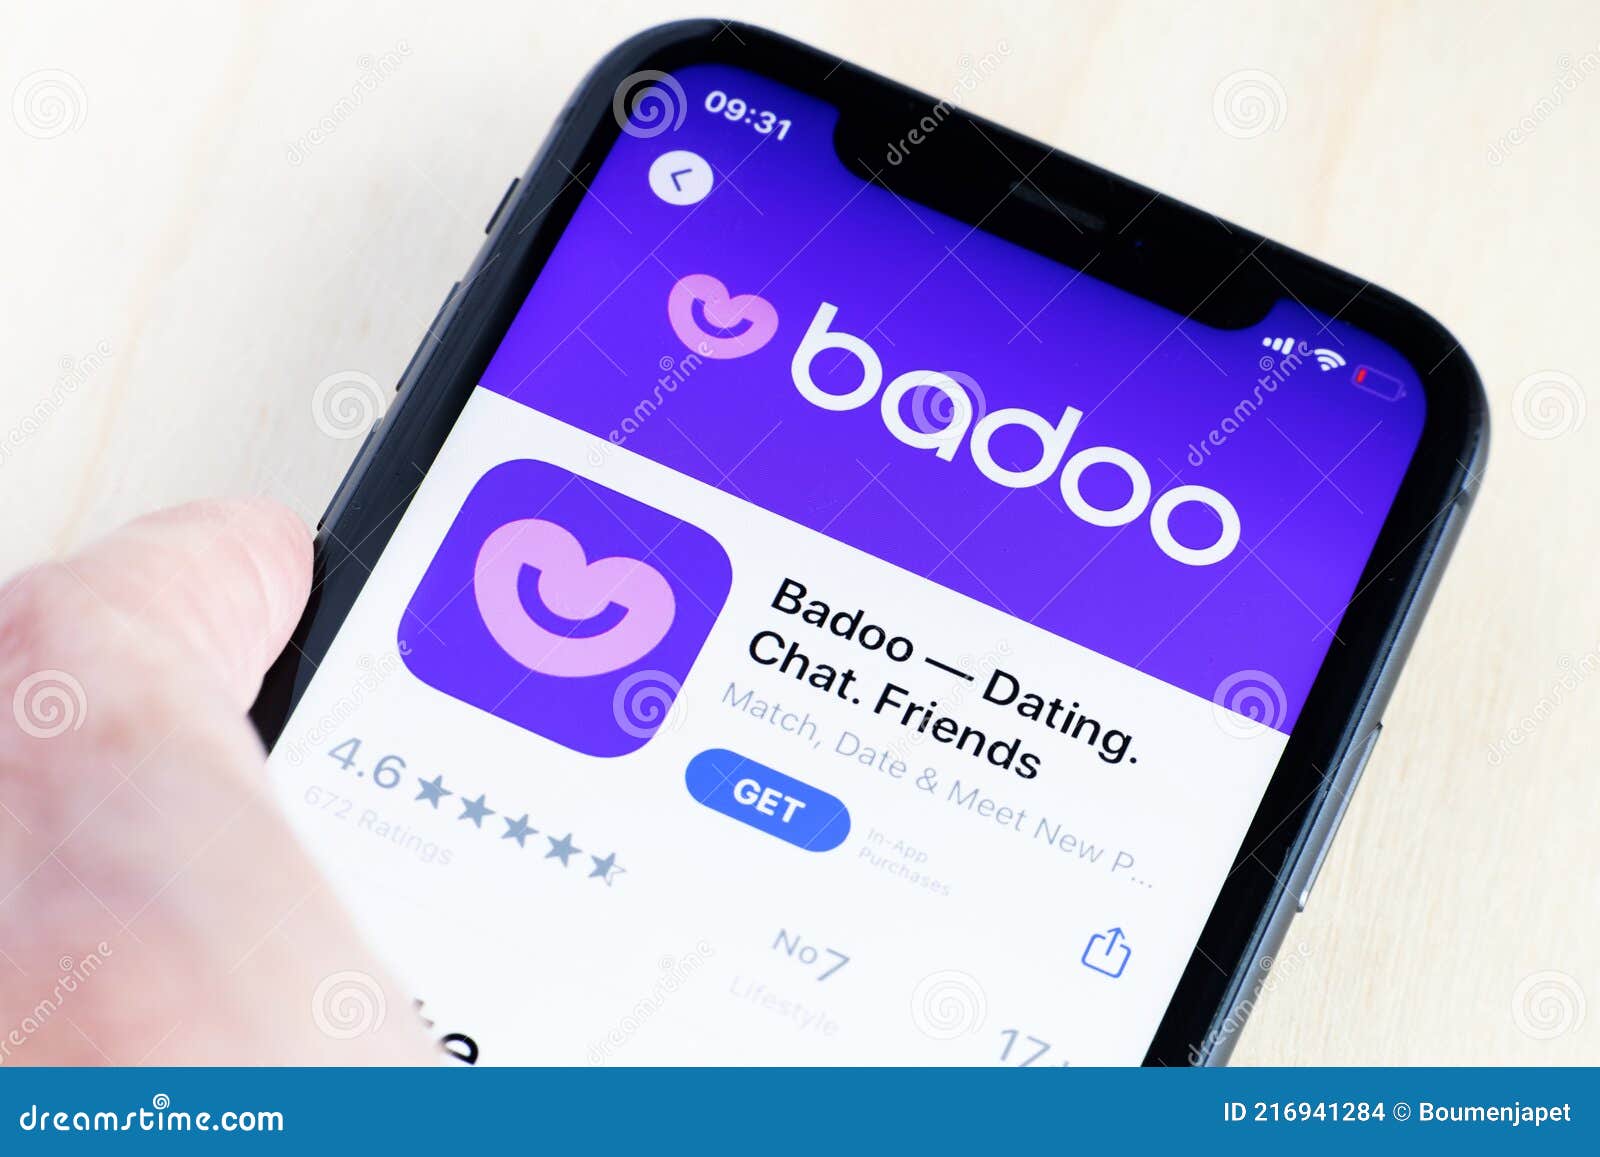 How to make someone favorite badoo